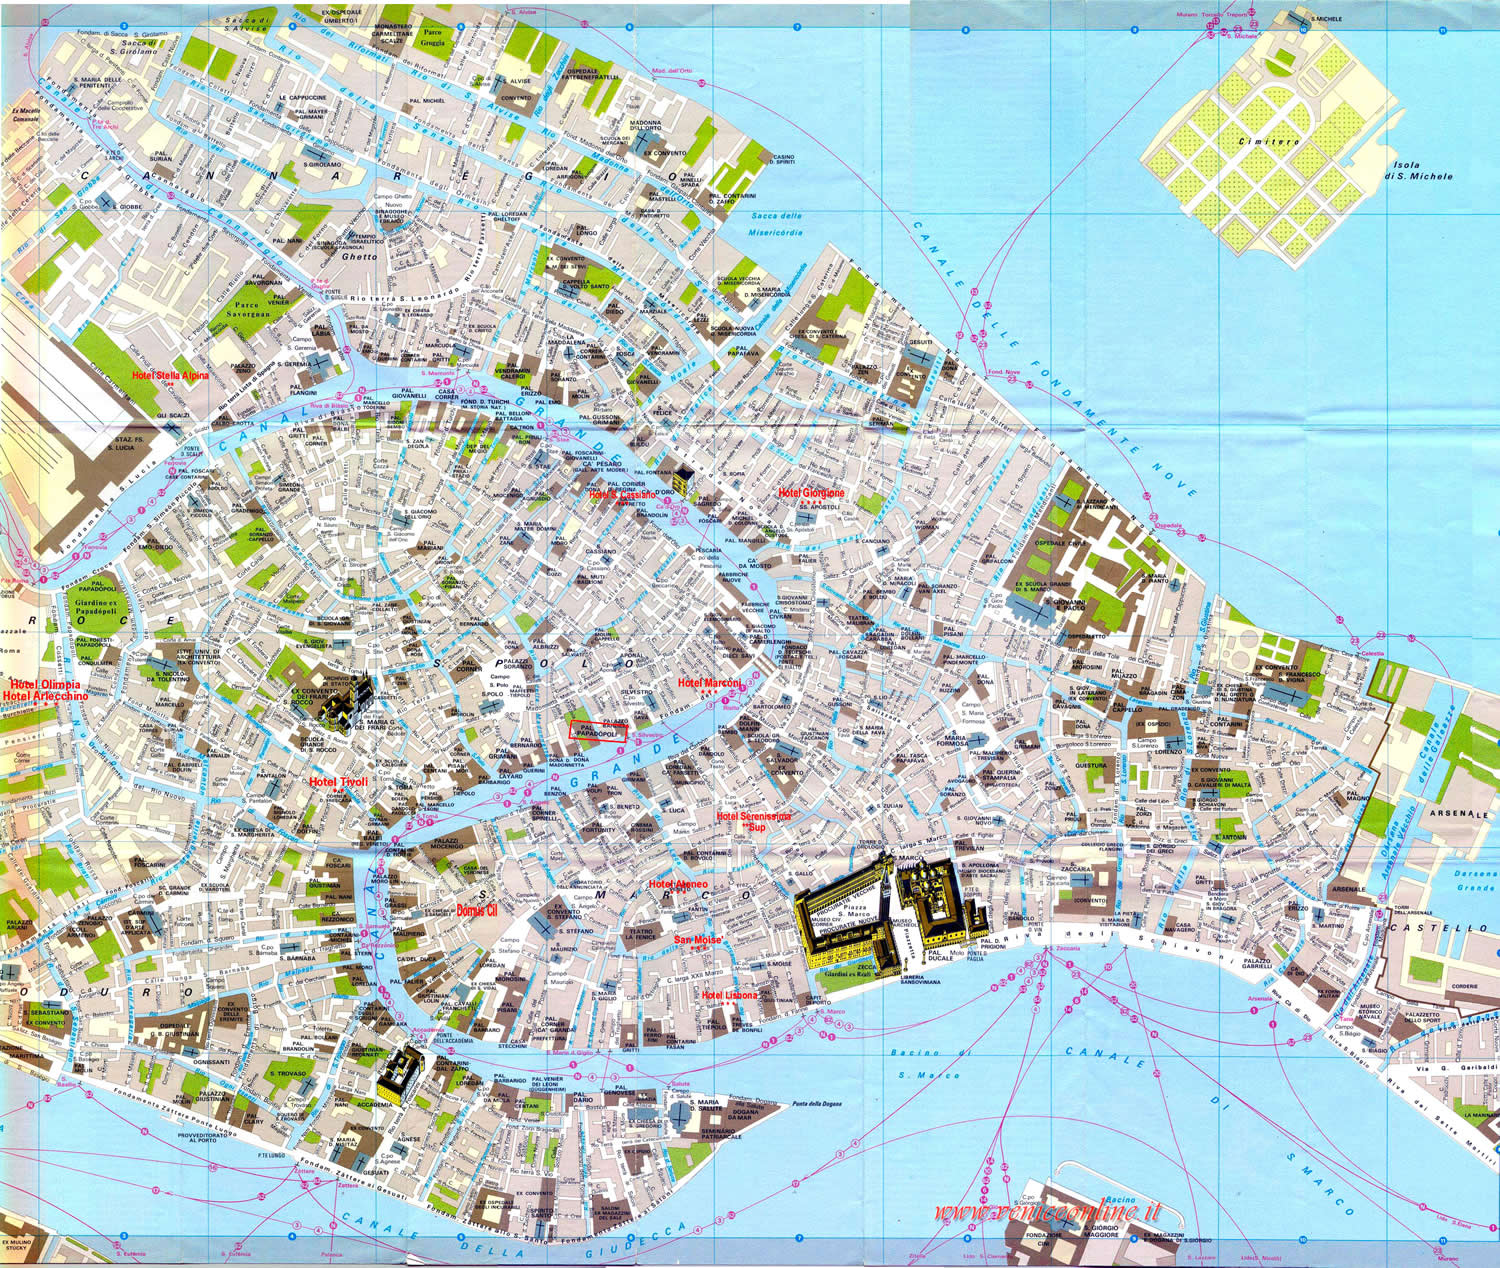 Venice Map and Venice Satellite Image